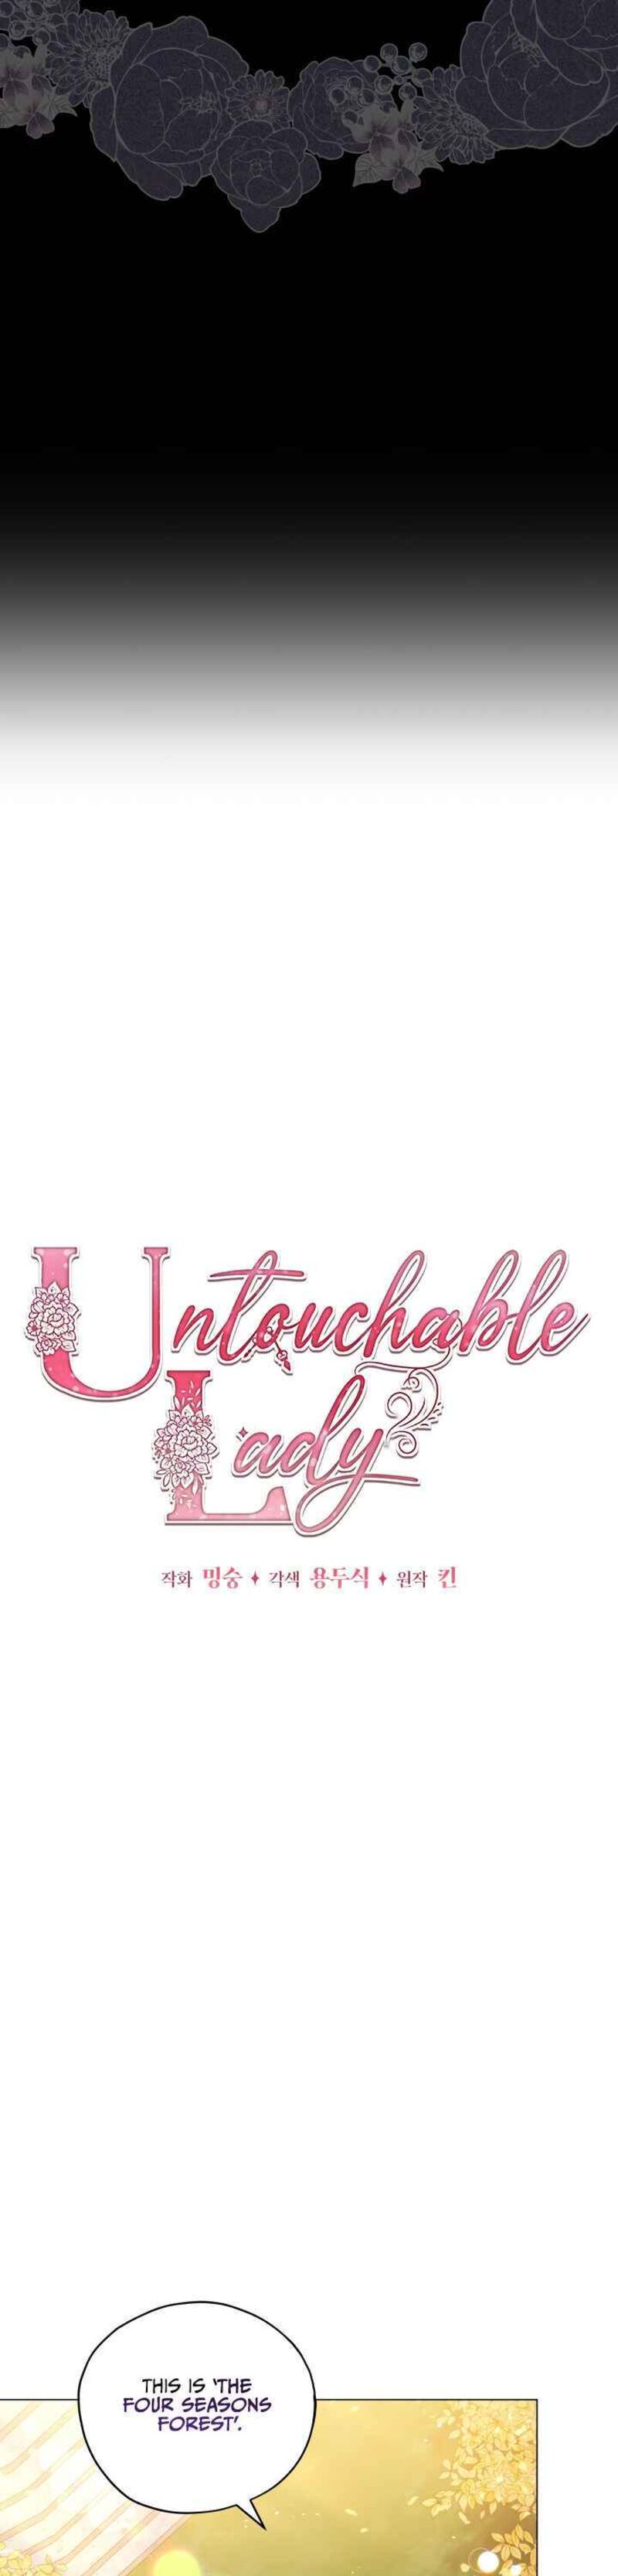 Untouchable Lady 23 6